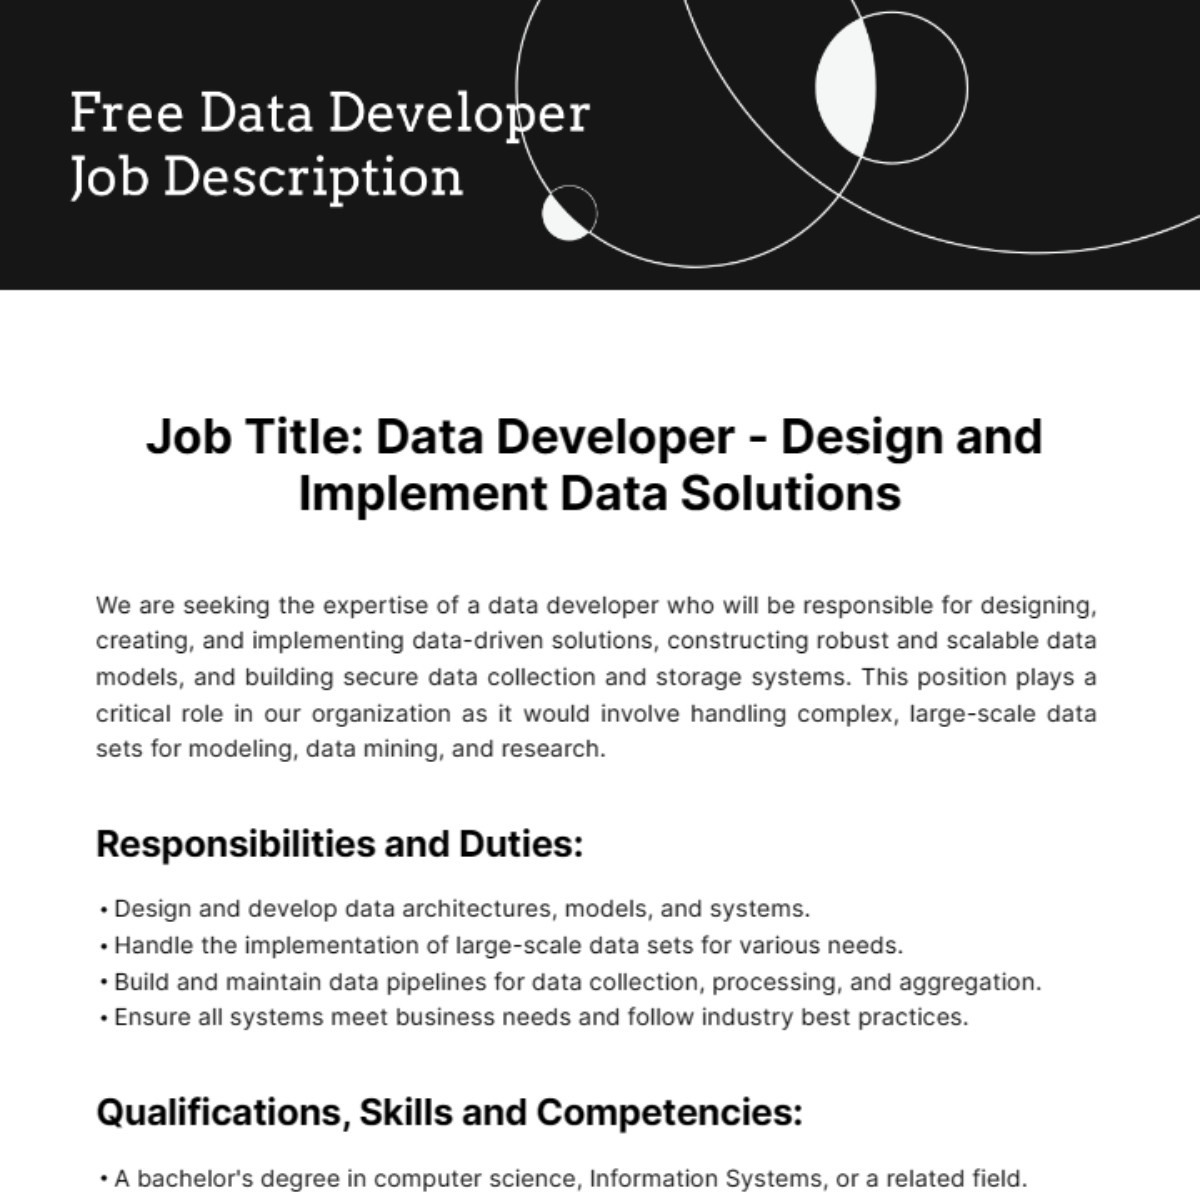 Free Data Developer Job Description Template